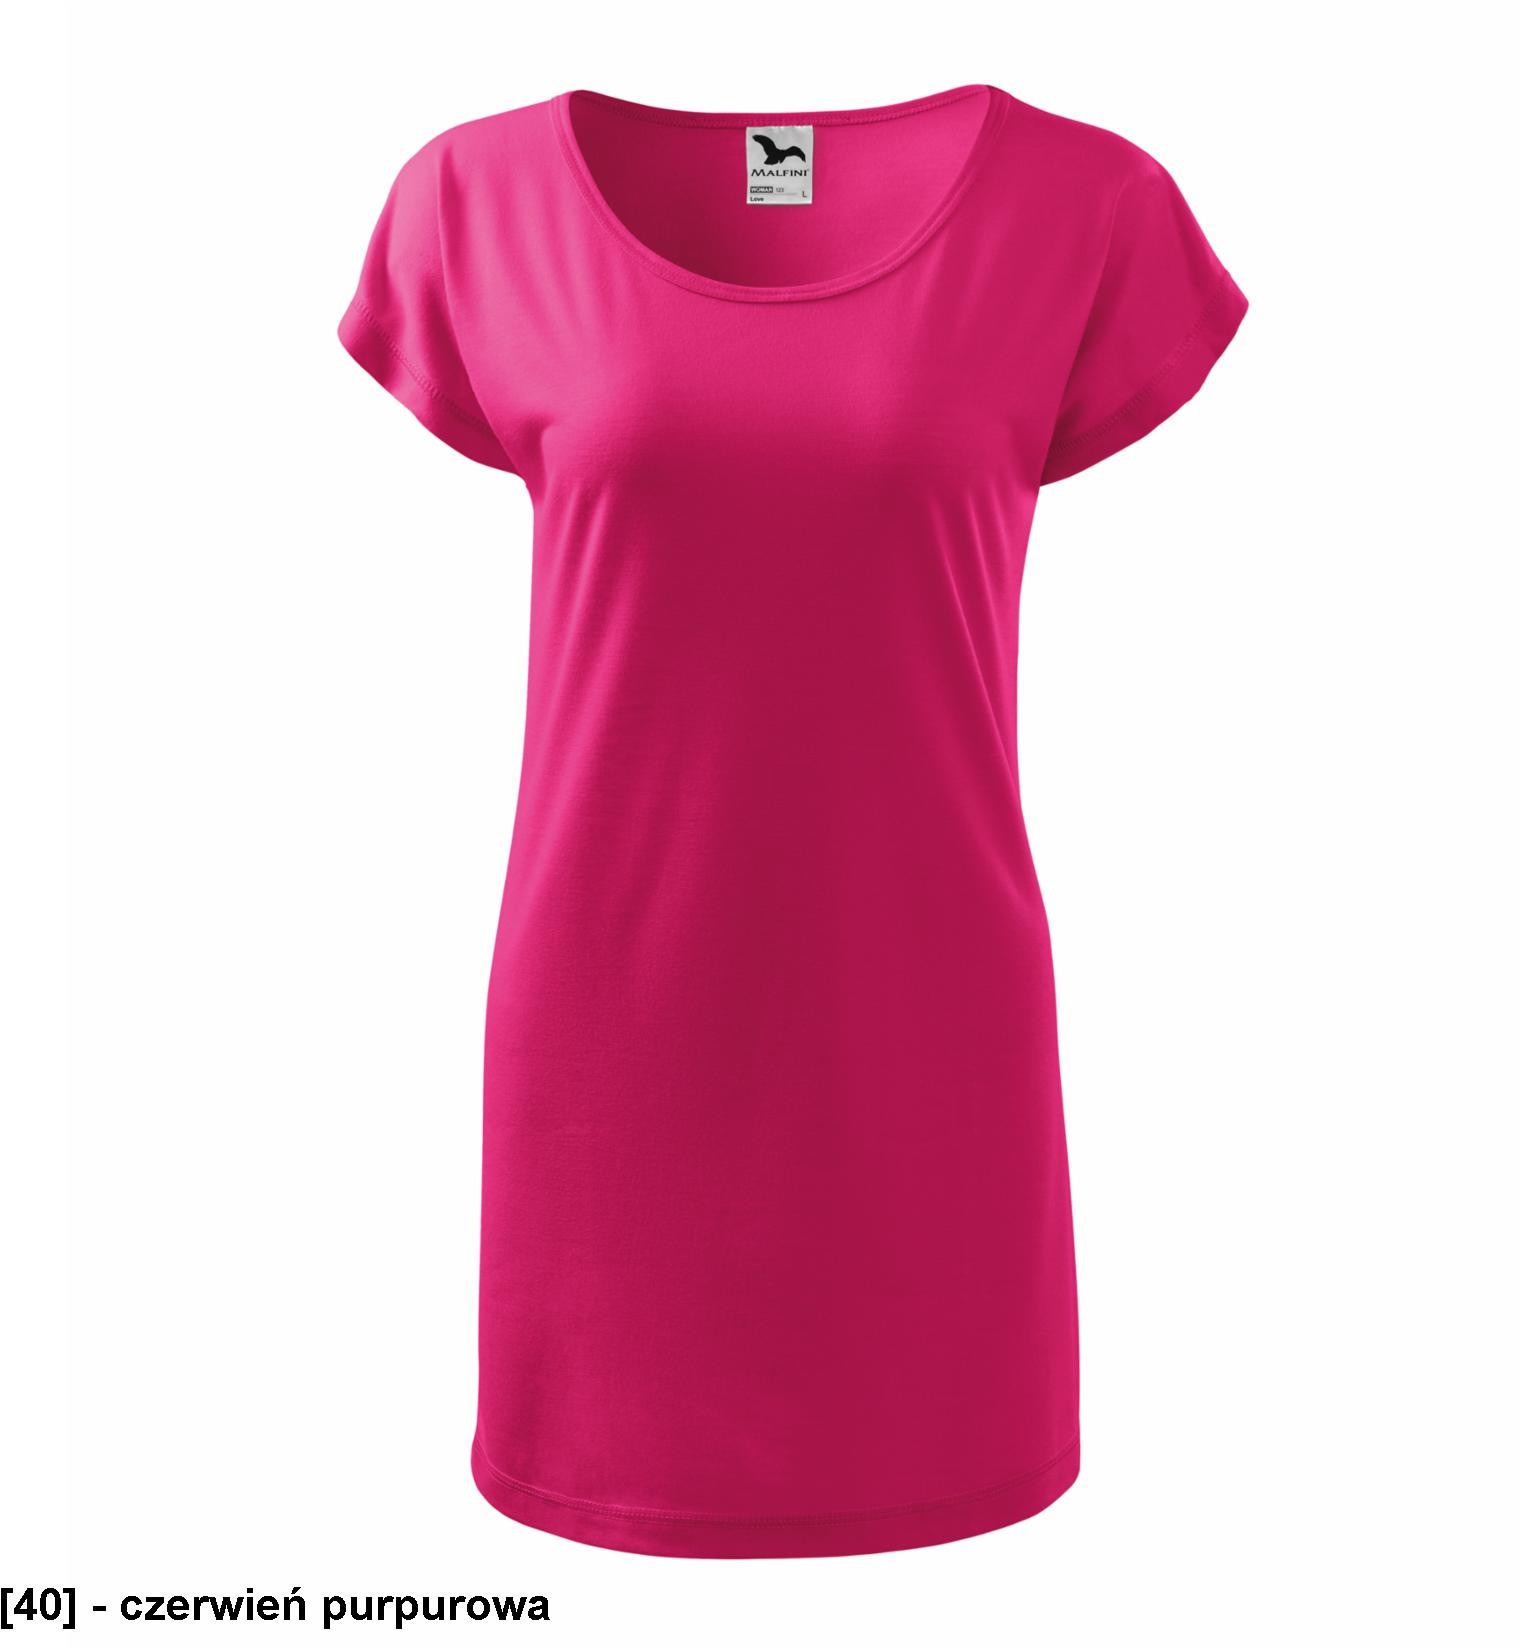 ADLER MALFINI Love 123 - Koszulka/sukienka damska, 170 g/m, 5% elastan, 95% wiskoza, 9 kolorów - XS-2XL Love 123